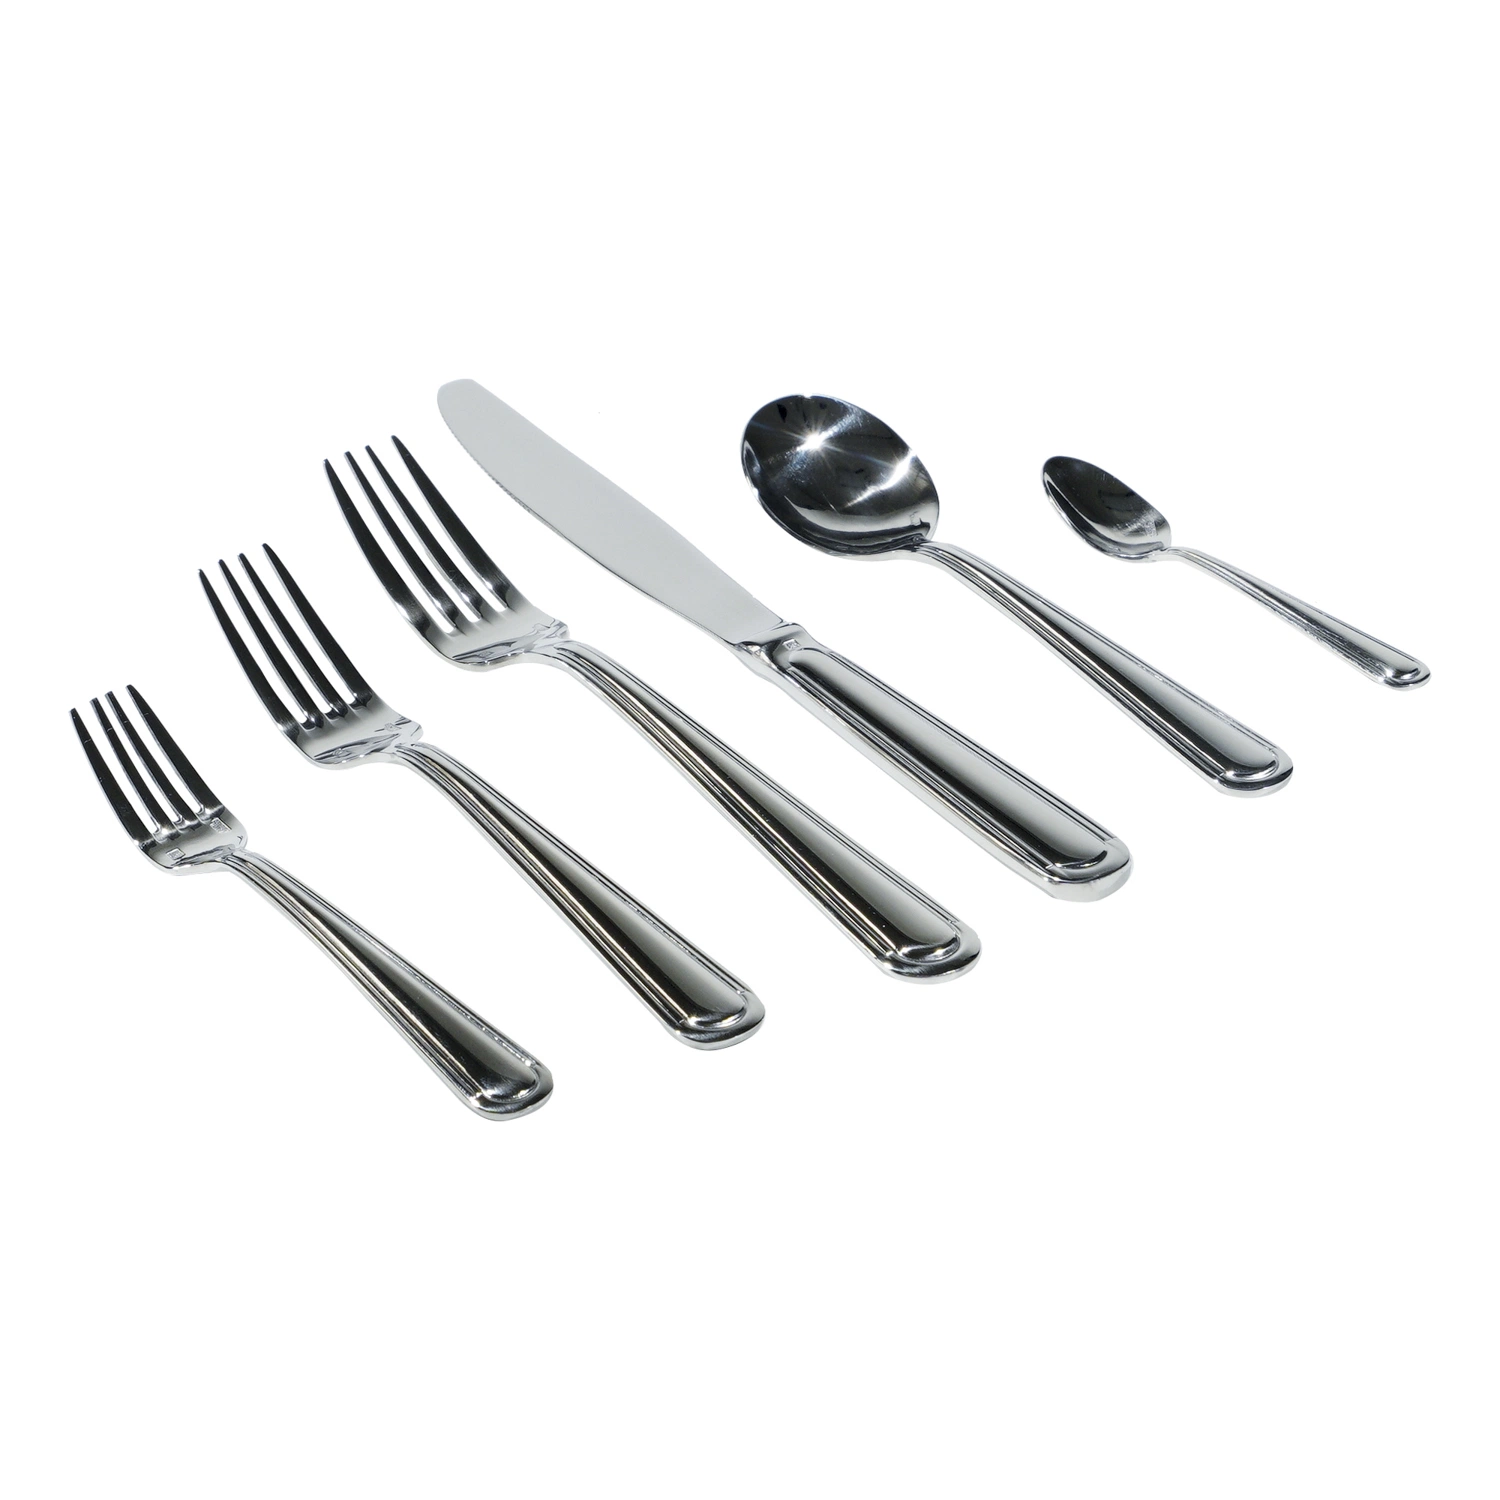 High Grade Stainless Steel Cutlery Set